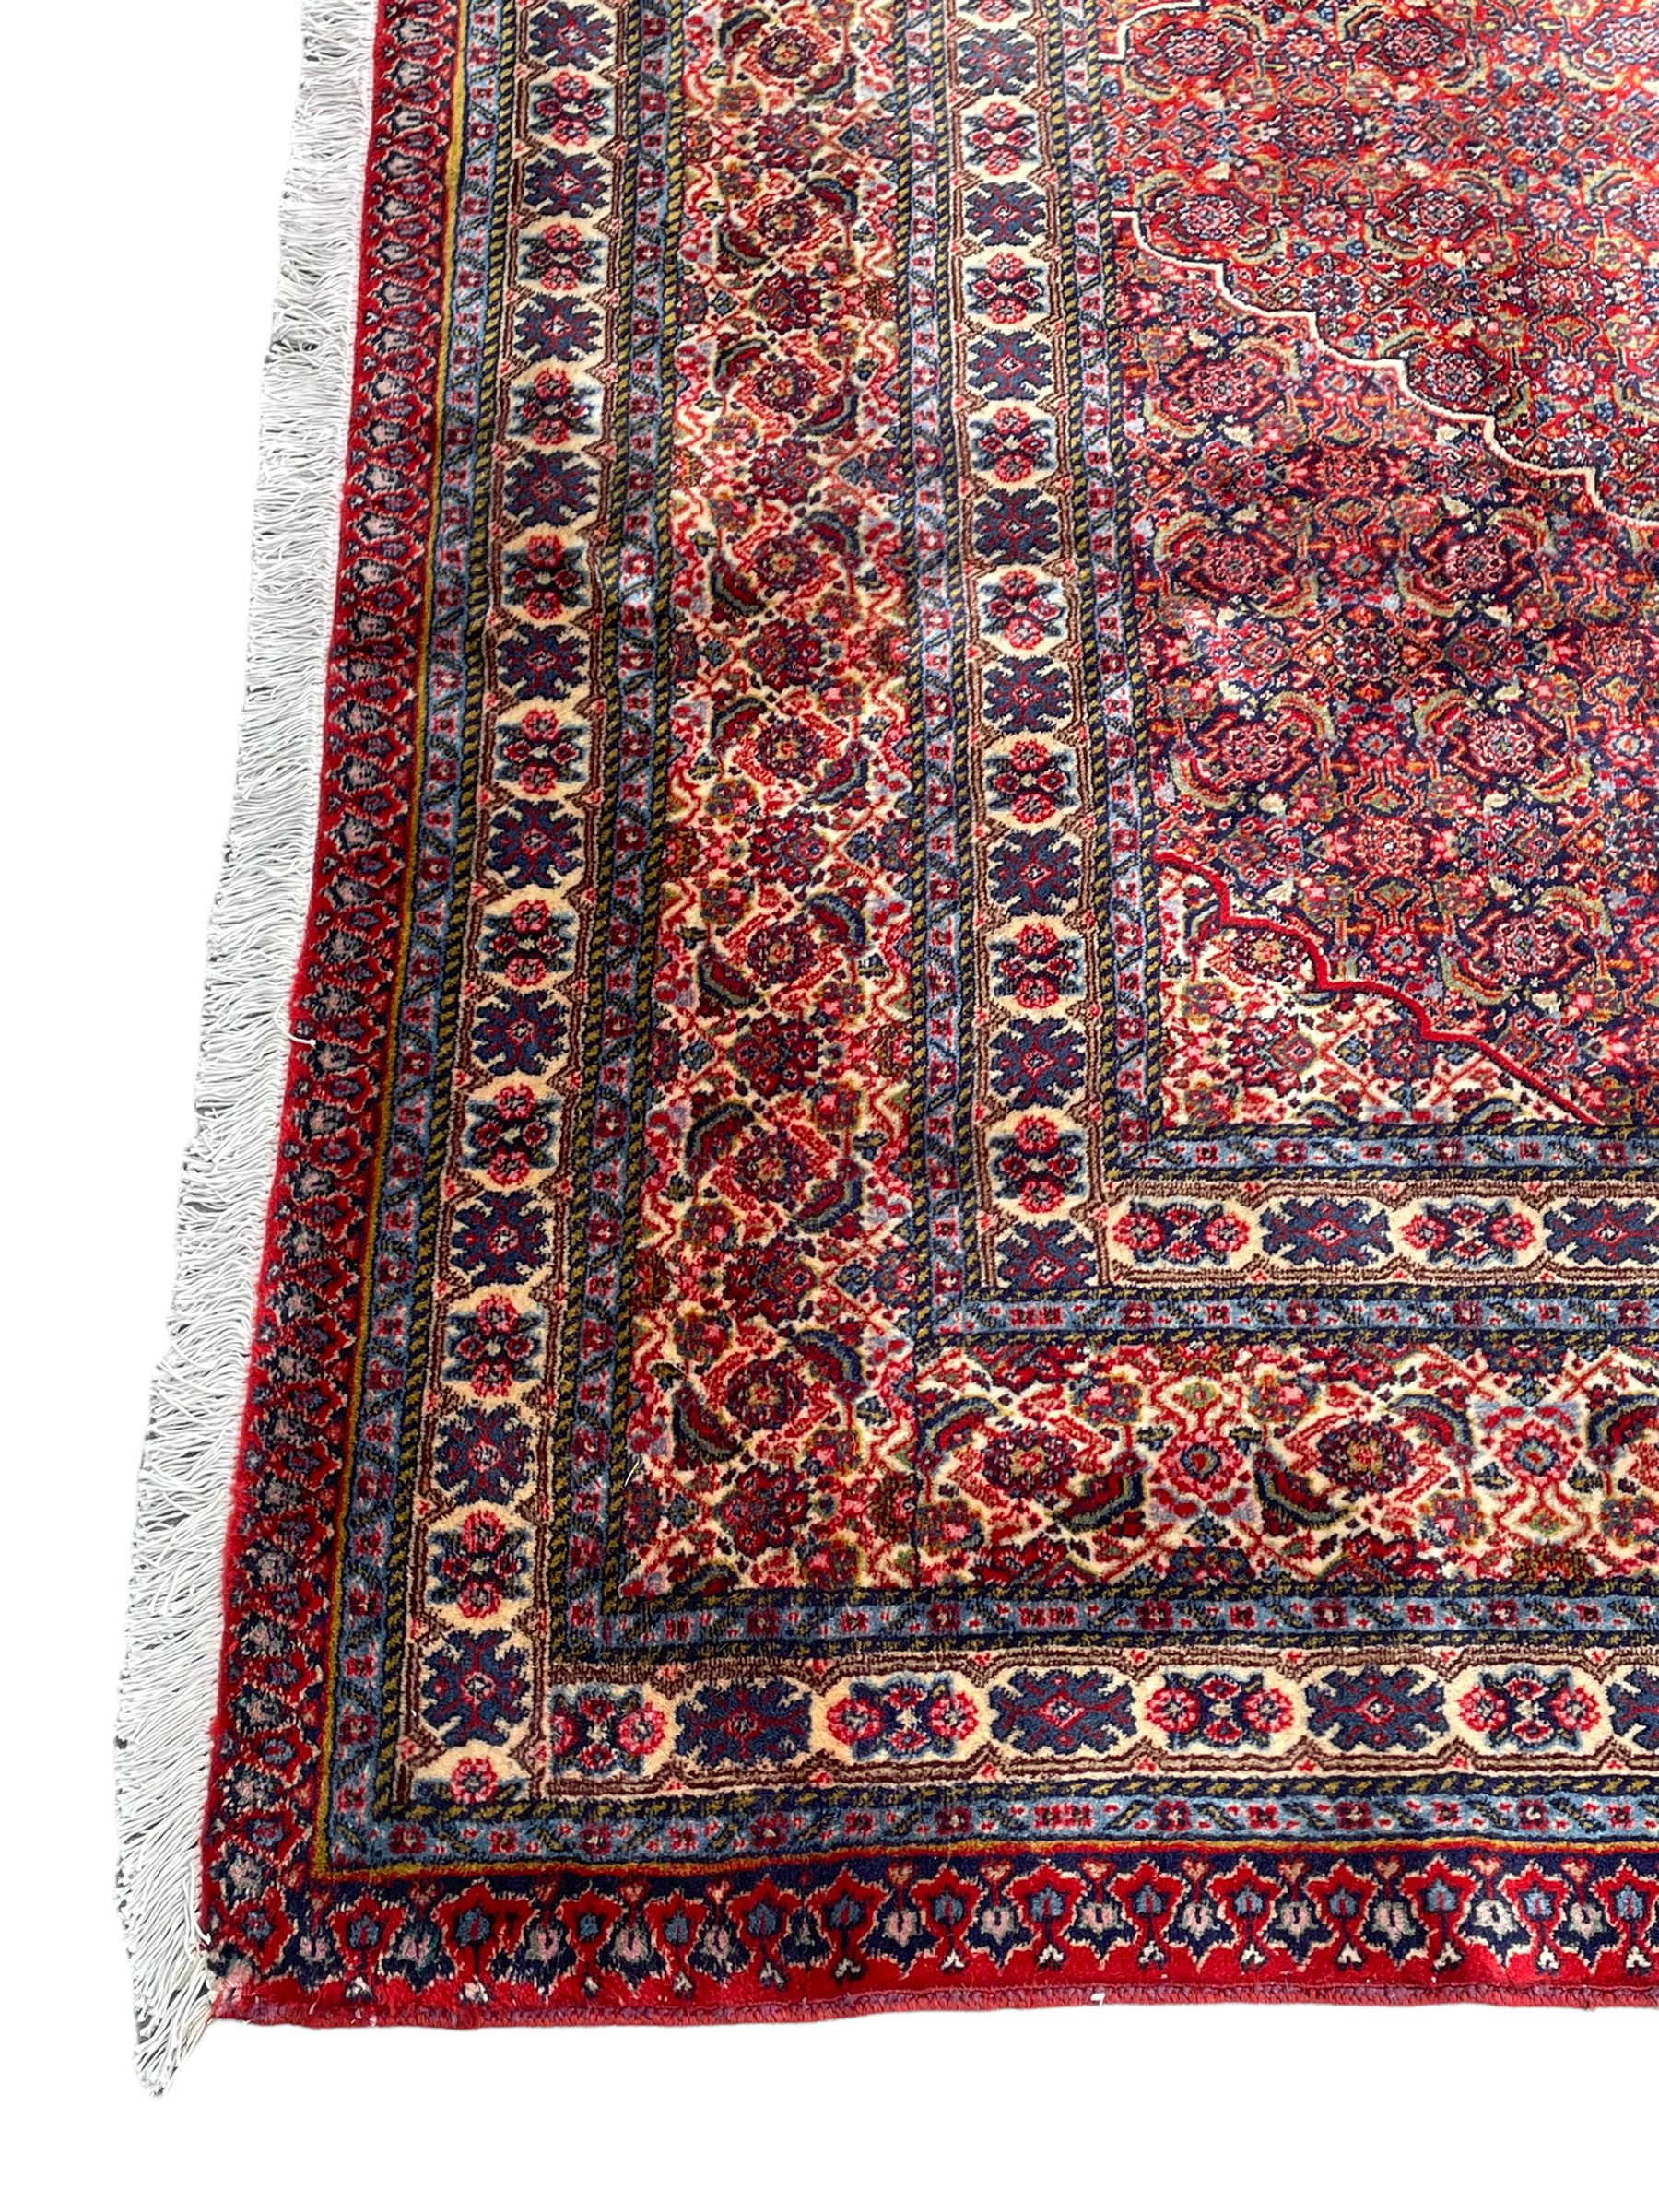 Fine Persian Bijar rug - Image 2 of 10